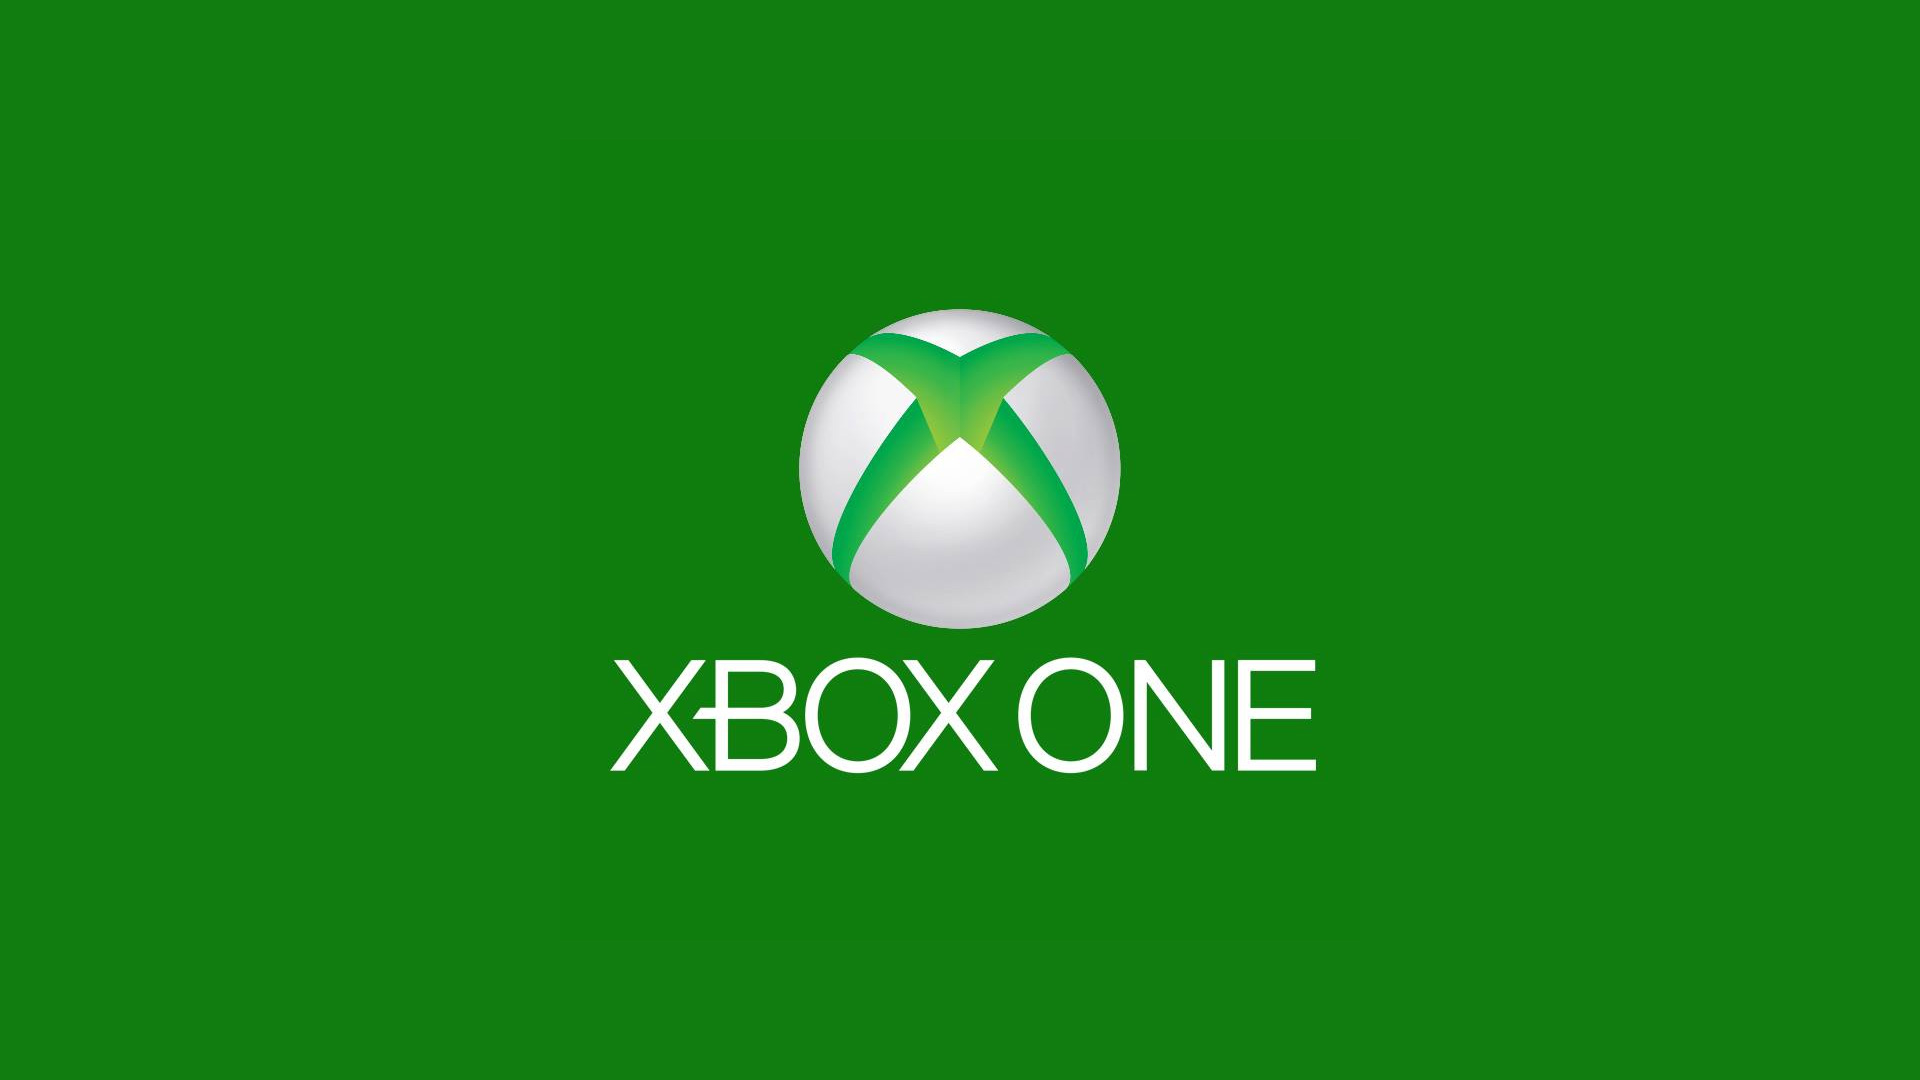 Xbox One Logo 1080p Wallpaper 720p